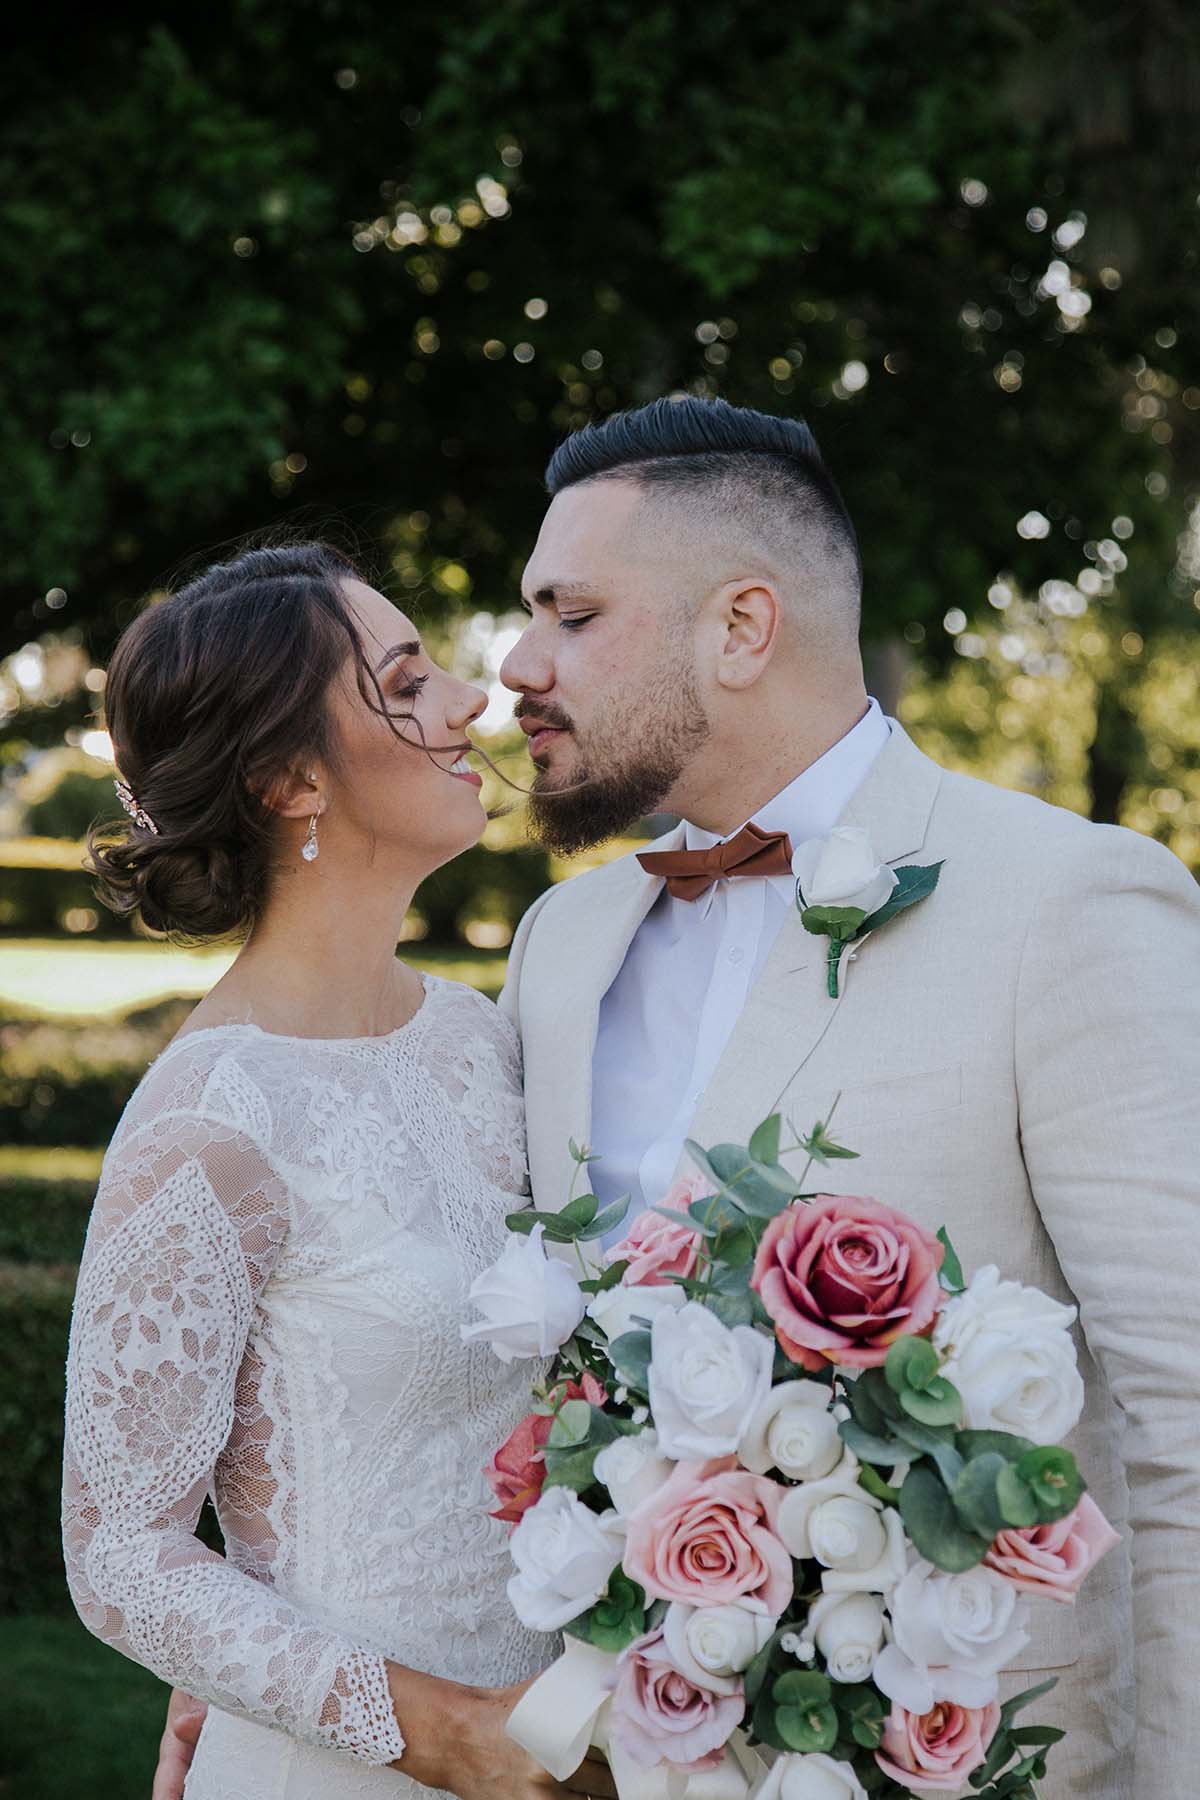 Wedding Photography - Bride and Groom kiss